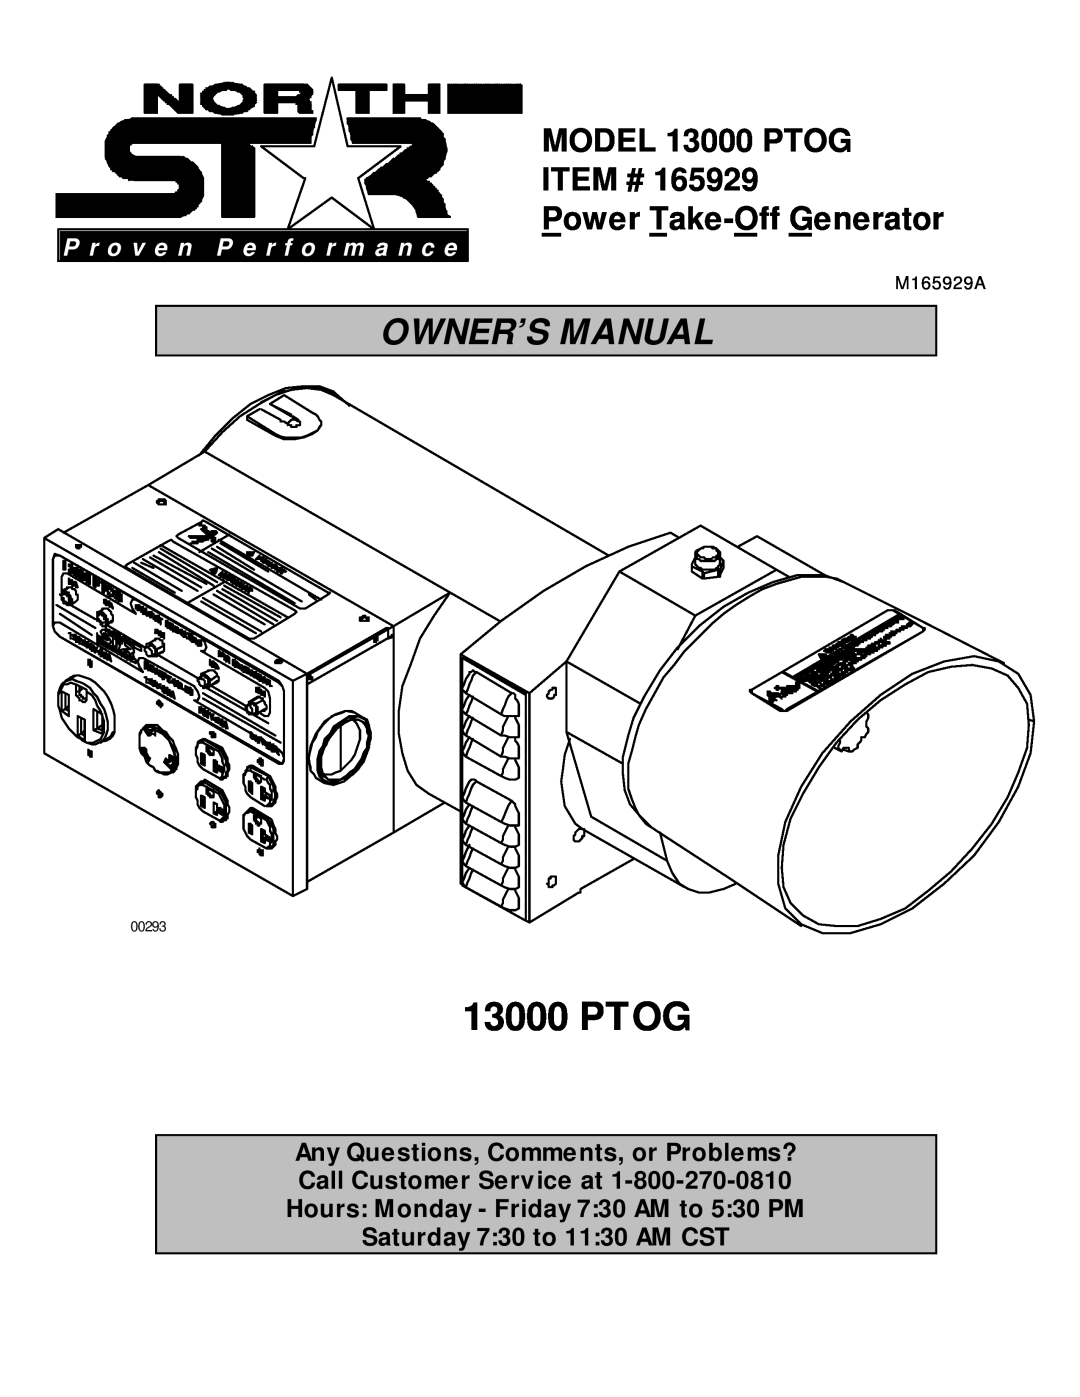 North Star owner manual Ptog, MODEL 13000 PTOG ITEM # Power Take-Off Generator, P r o v e n P e r f o r m a n c e 